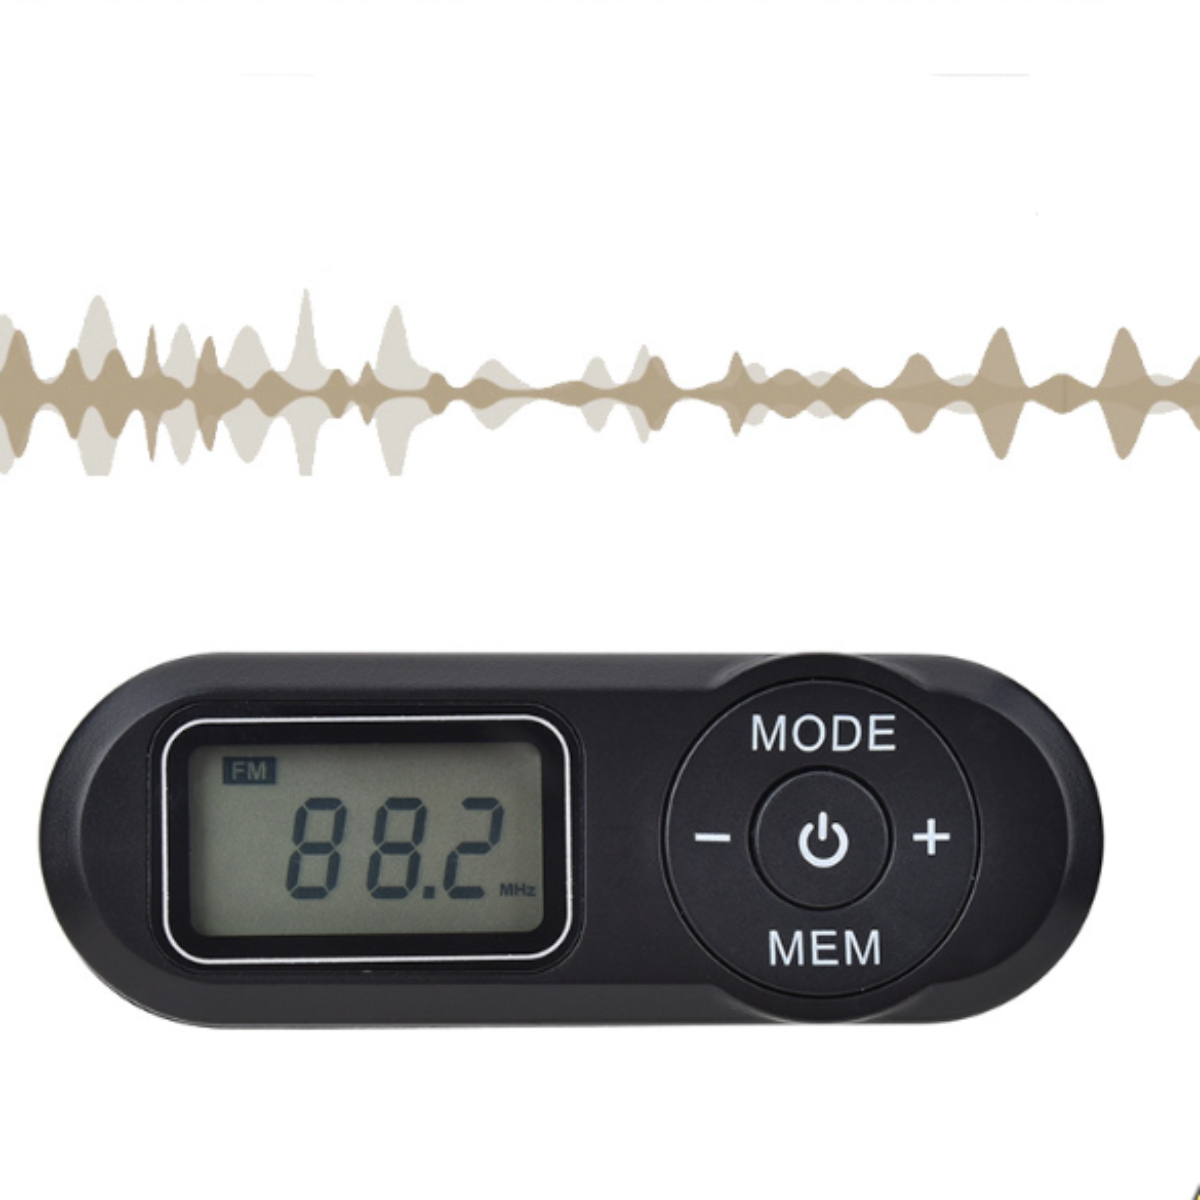 ENBAOXIN Tragbares Stabiler - Digitaldisplay-Funktion FM, Radio Radio, mit FM-Signalempfang FM, Schwarz